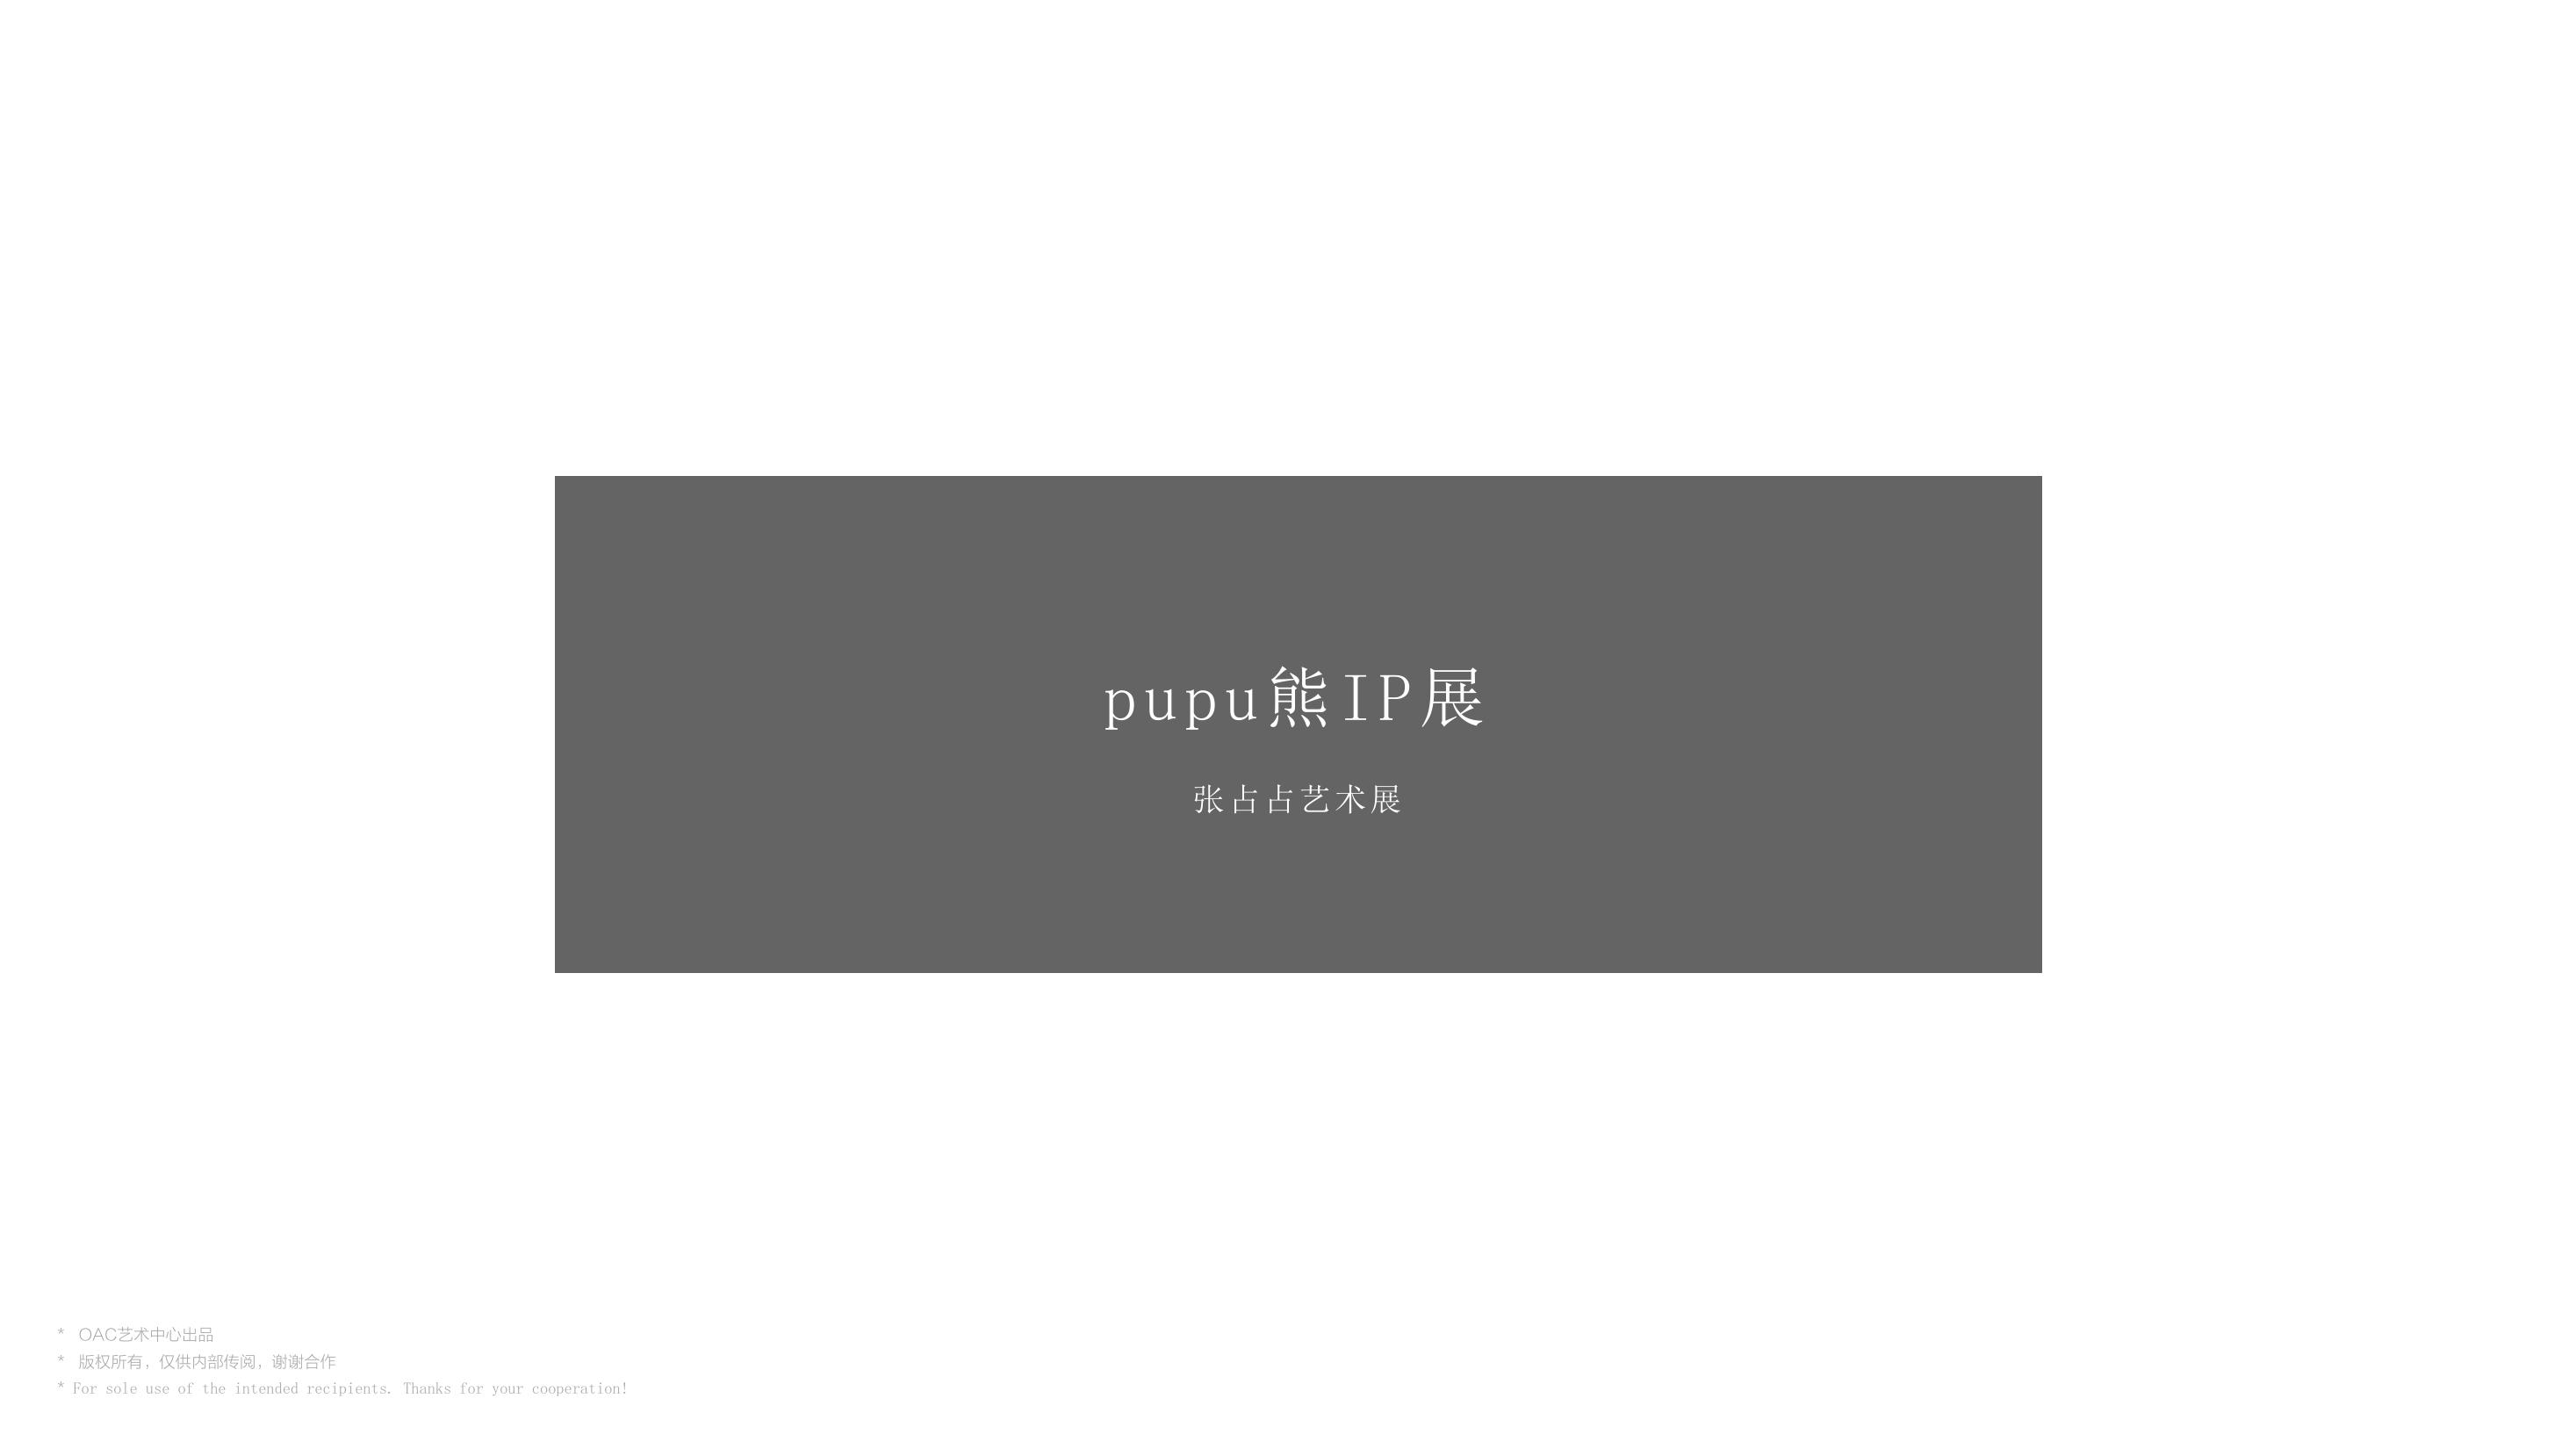 PUPU熊IP展 - 艺术家张占占作品艺术展